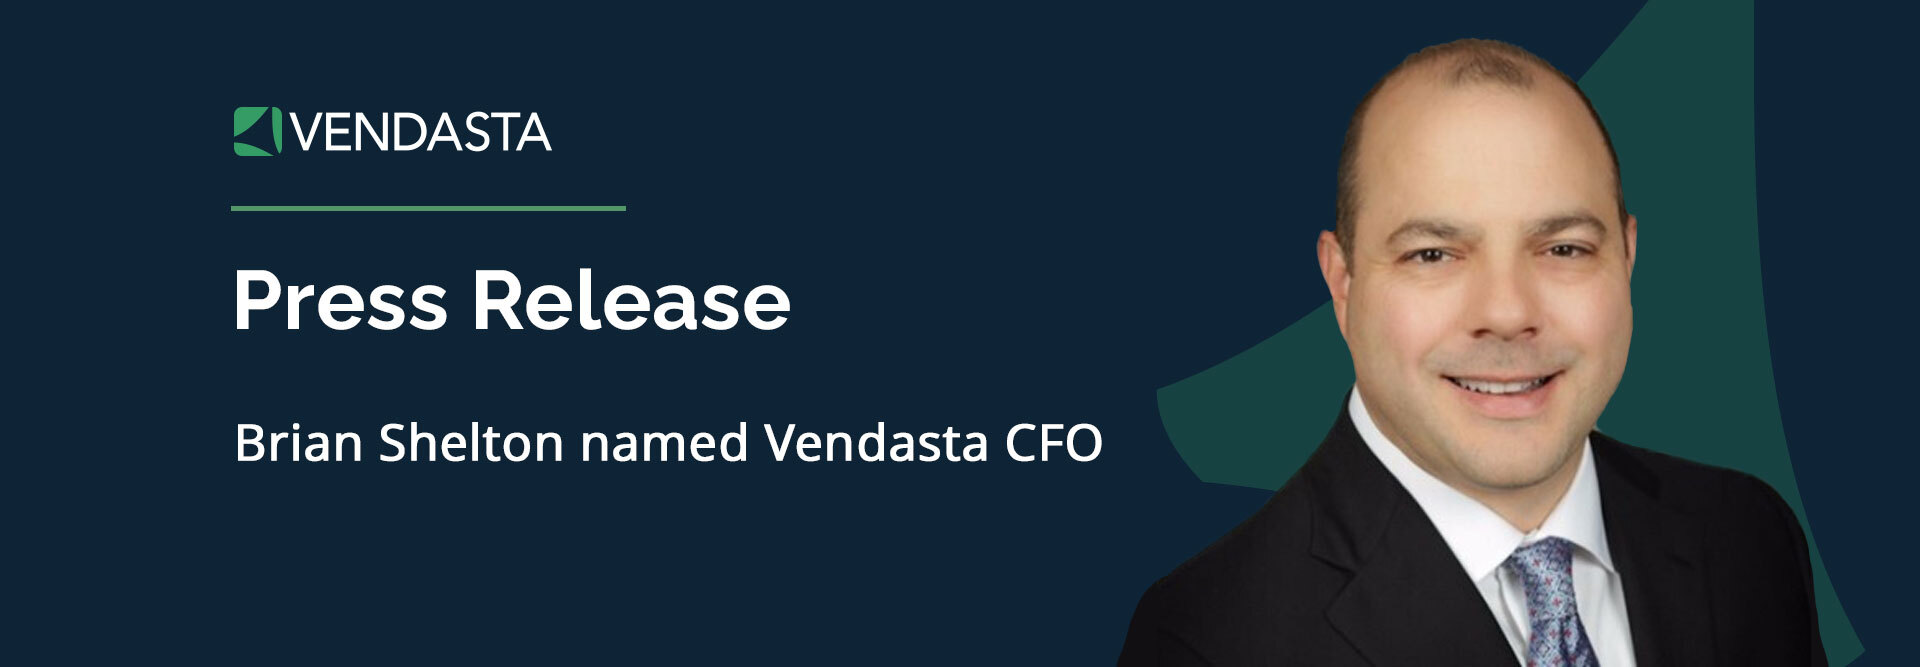 Brian Shelton named Vendasta Chief Financial Officer